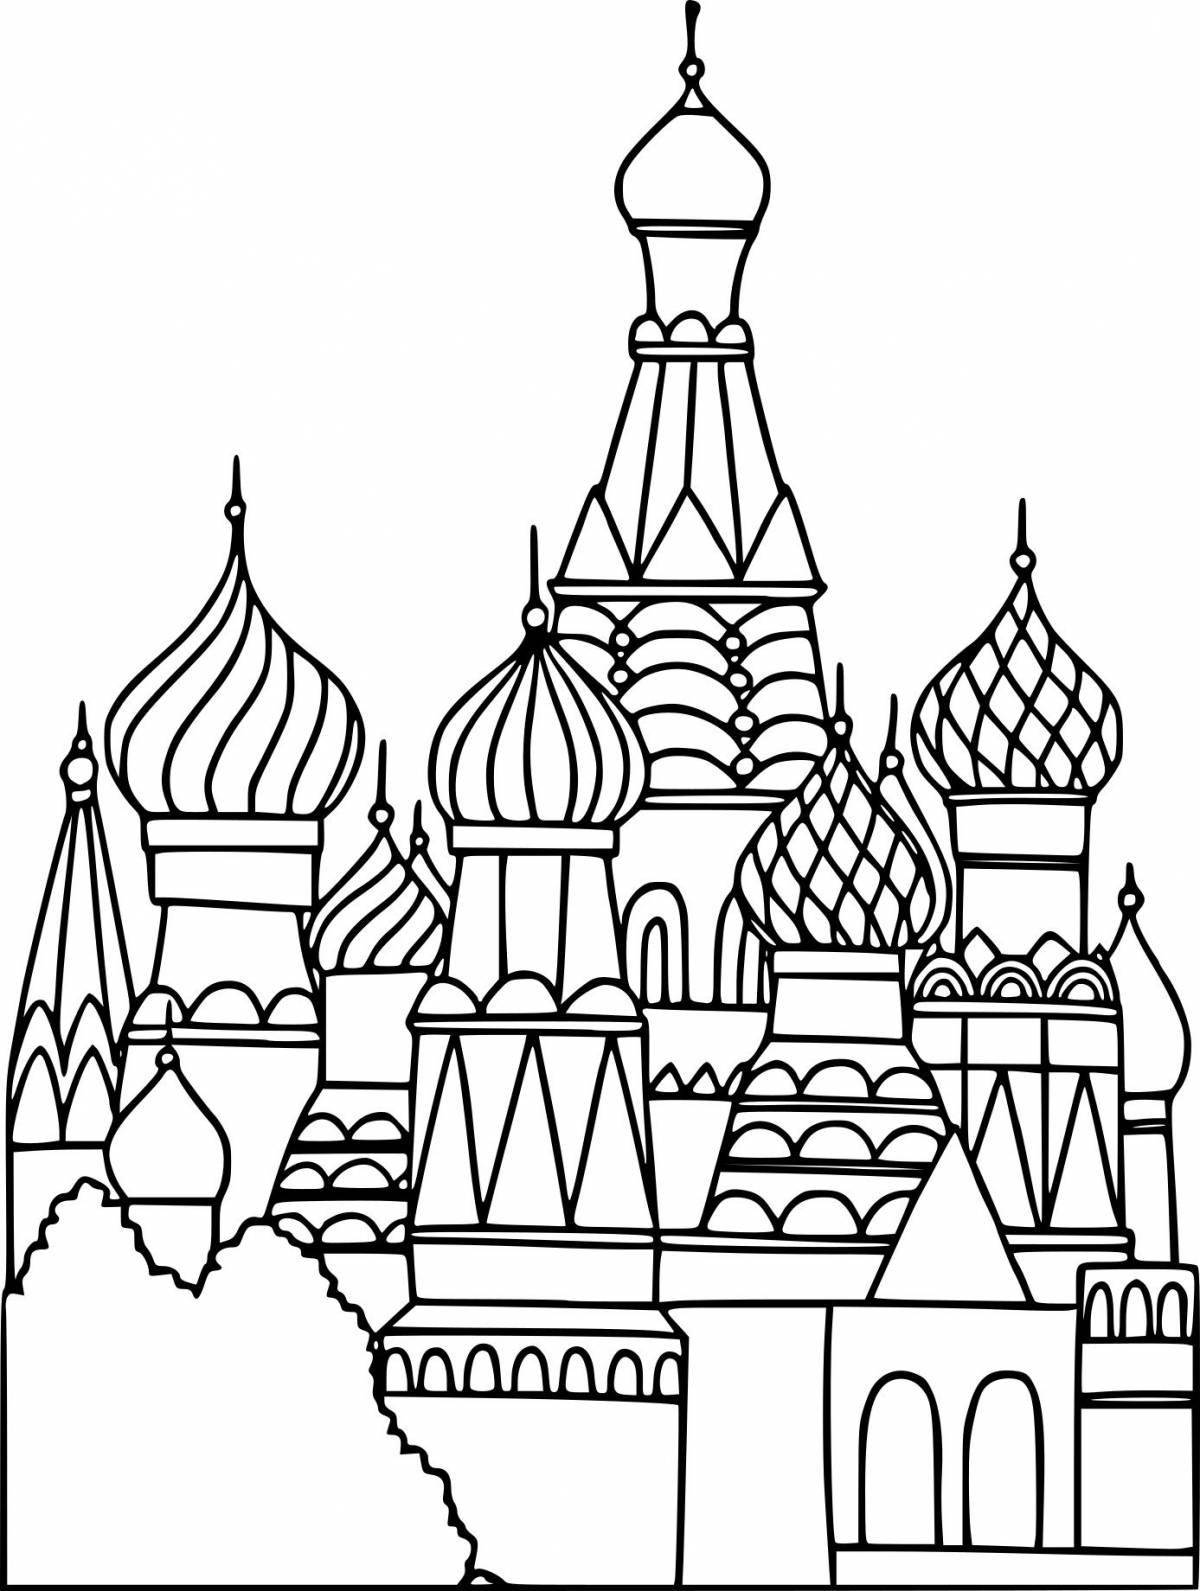 Замысловатая раскраска кремля